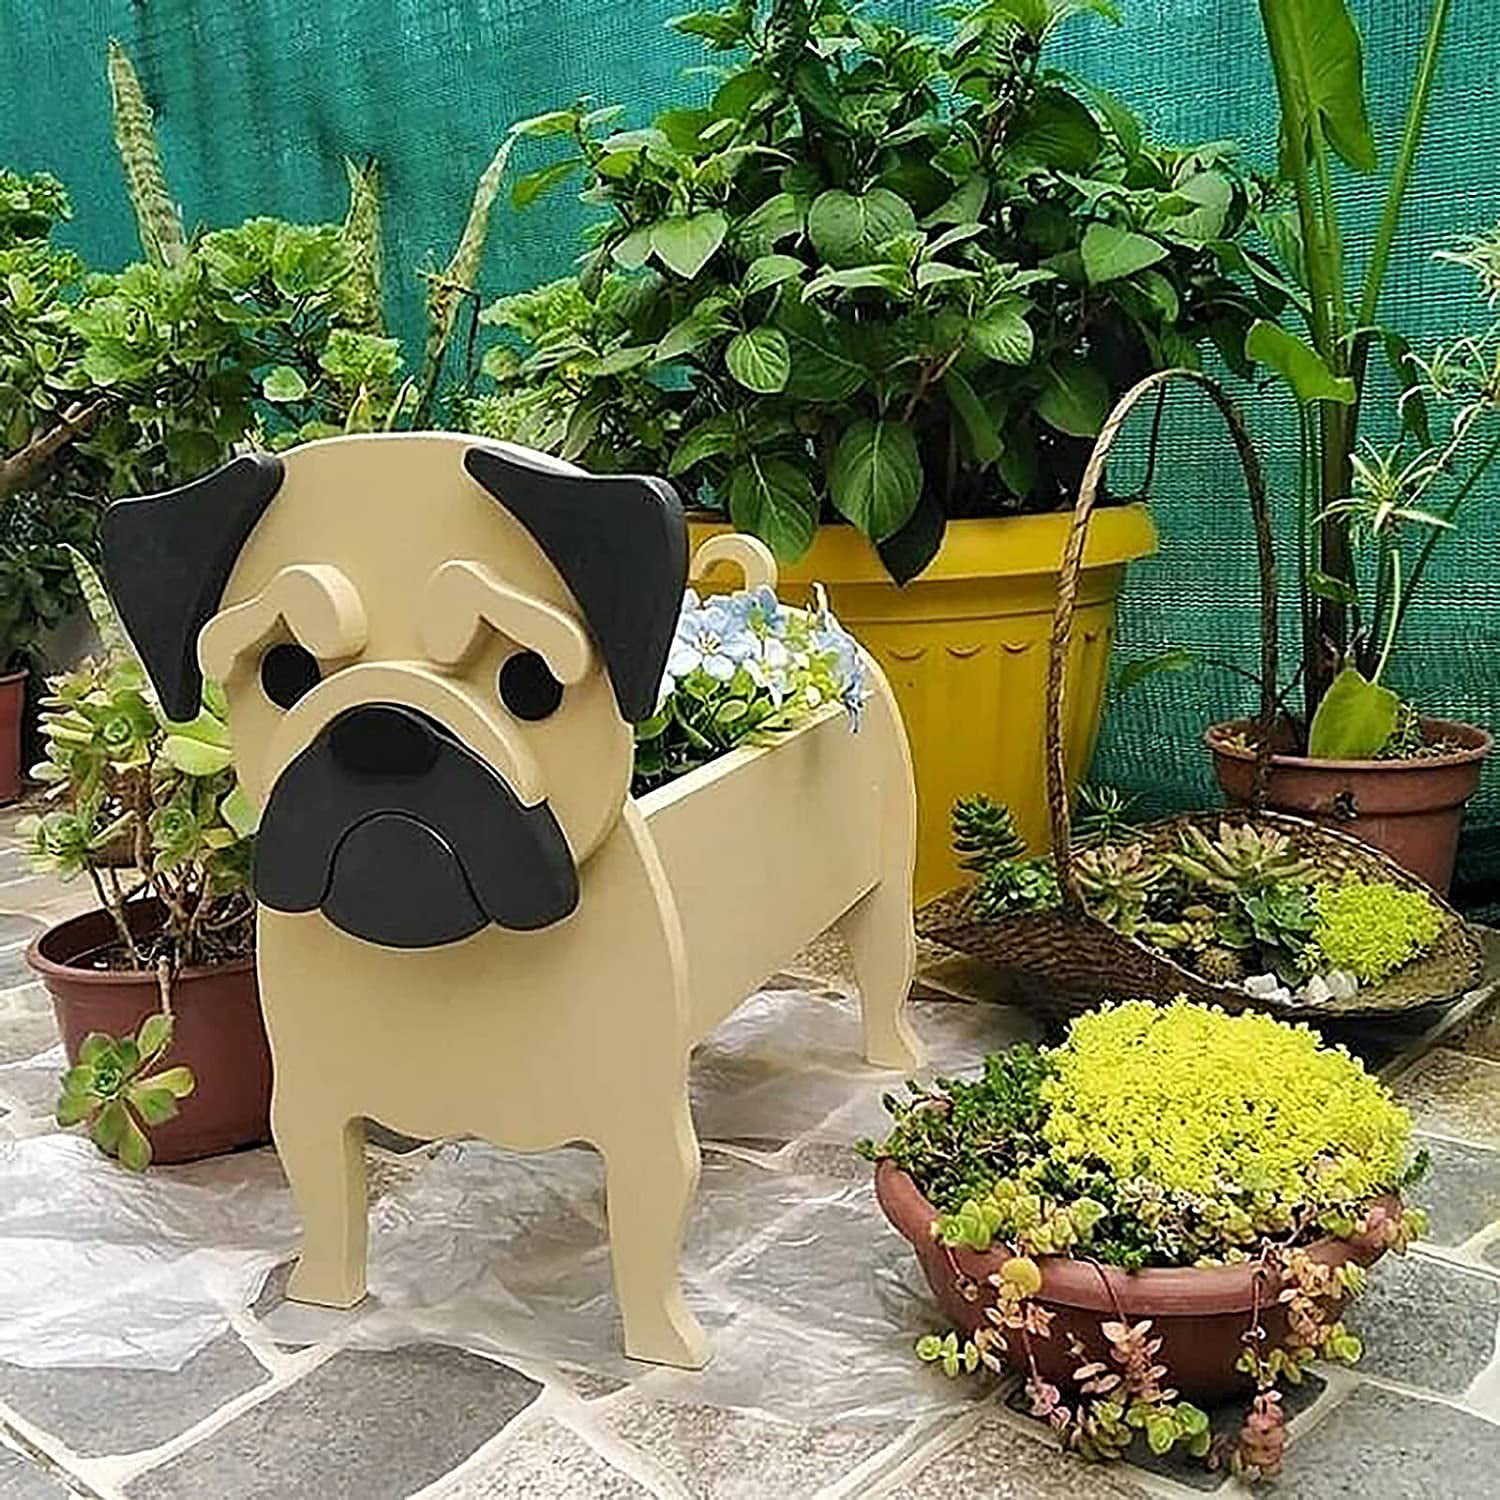 2021 Dog Planter - Pug Planter, Multiple Dog Shape Cartoon Succulent